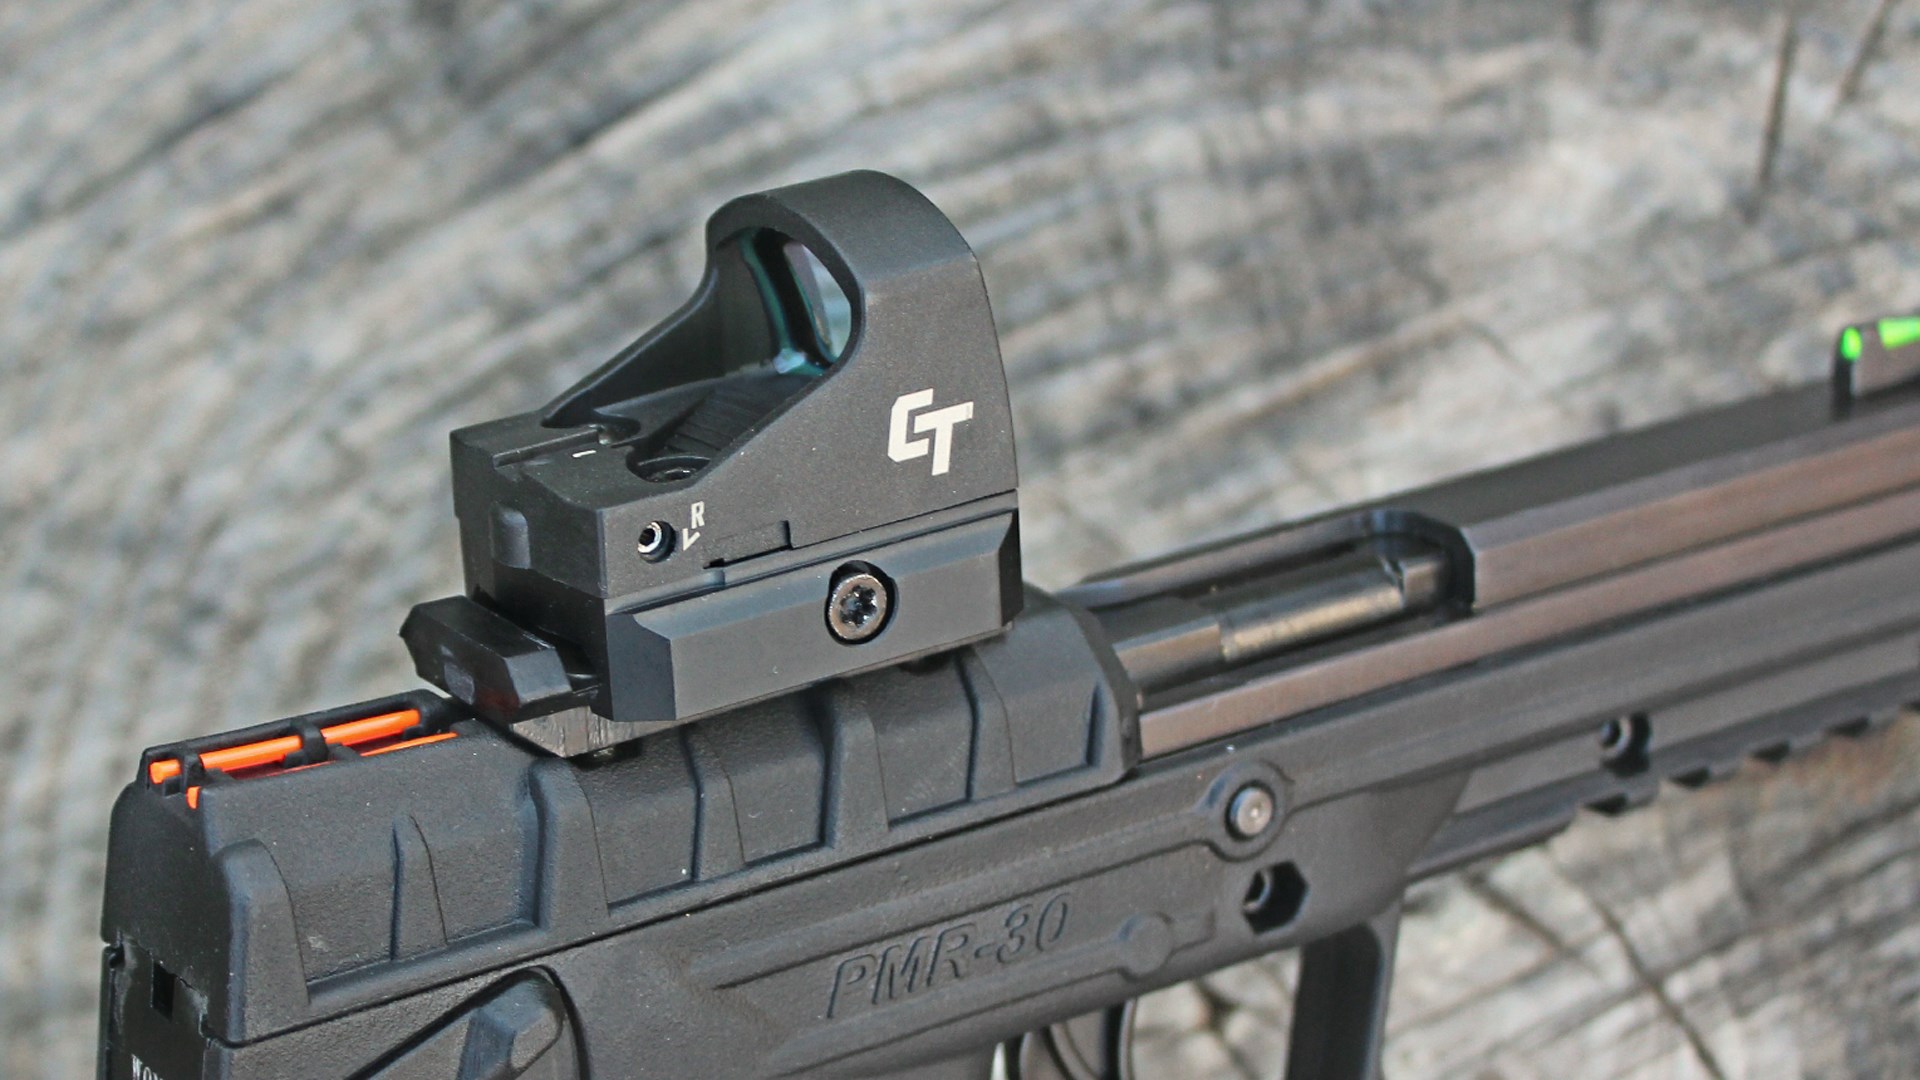 Keltec PMR-30 pistol detail image of slide showing optic red-dot sight mounted to slide